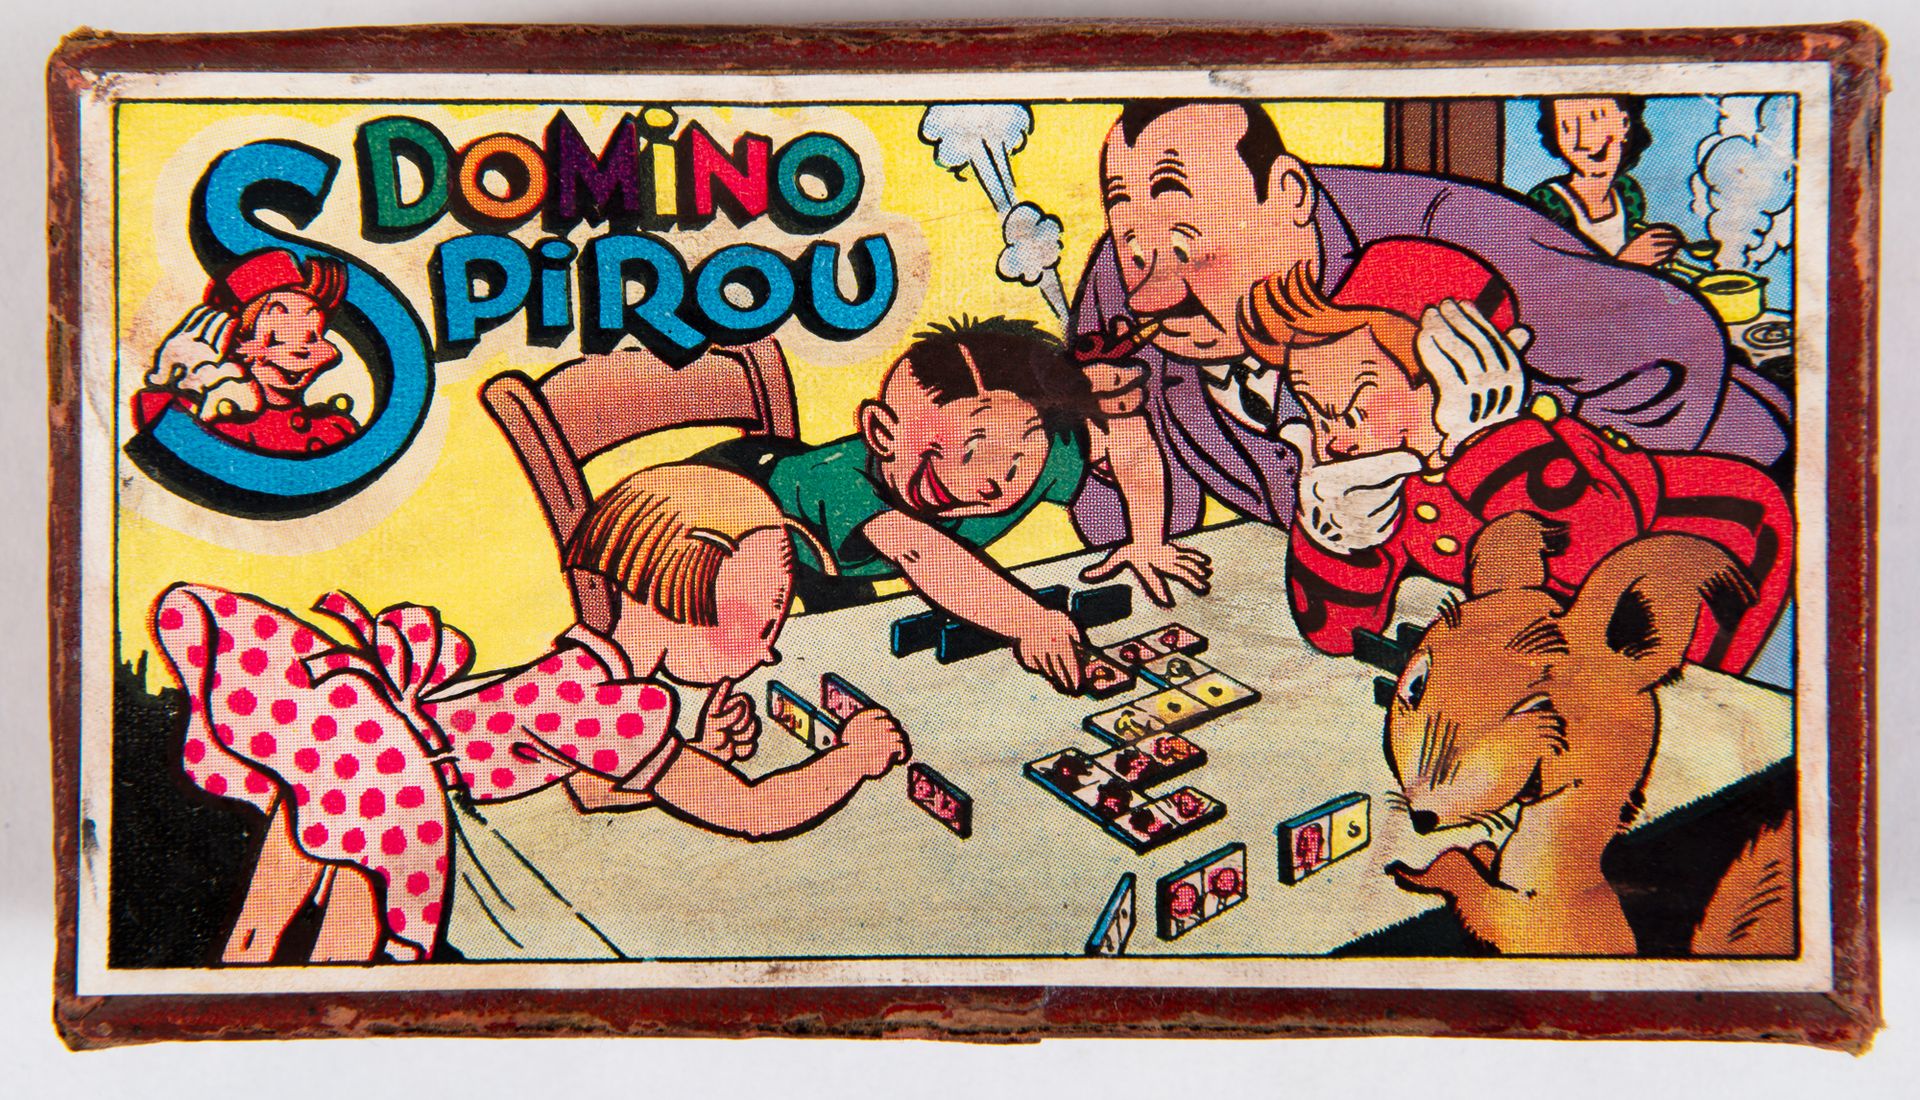 Null Spirou - Domino : 1940年代末出版的罕见游戏。状况良好。